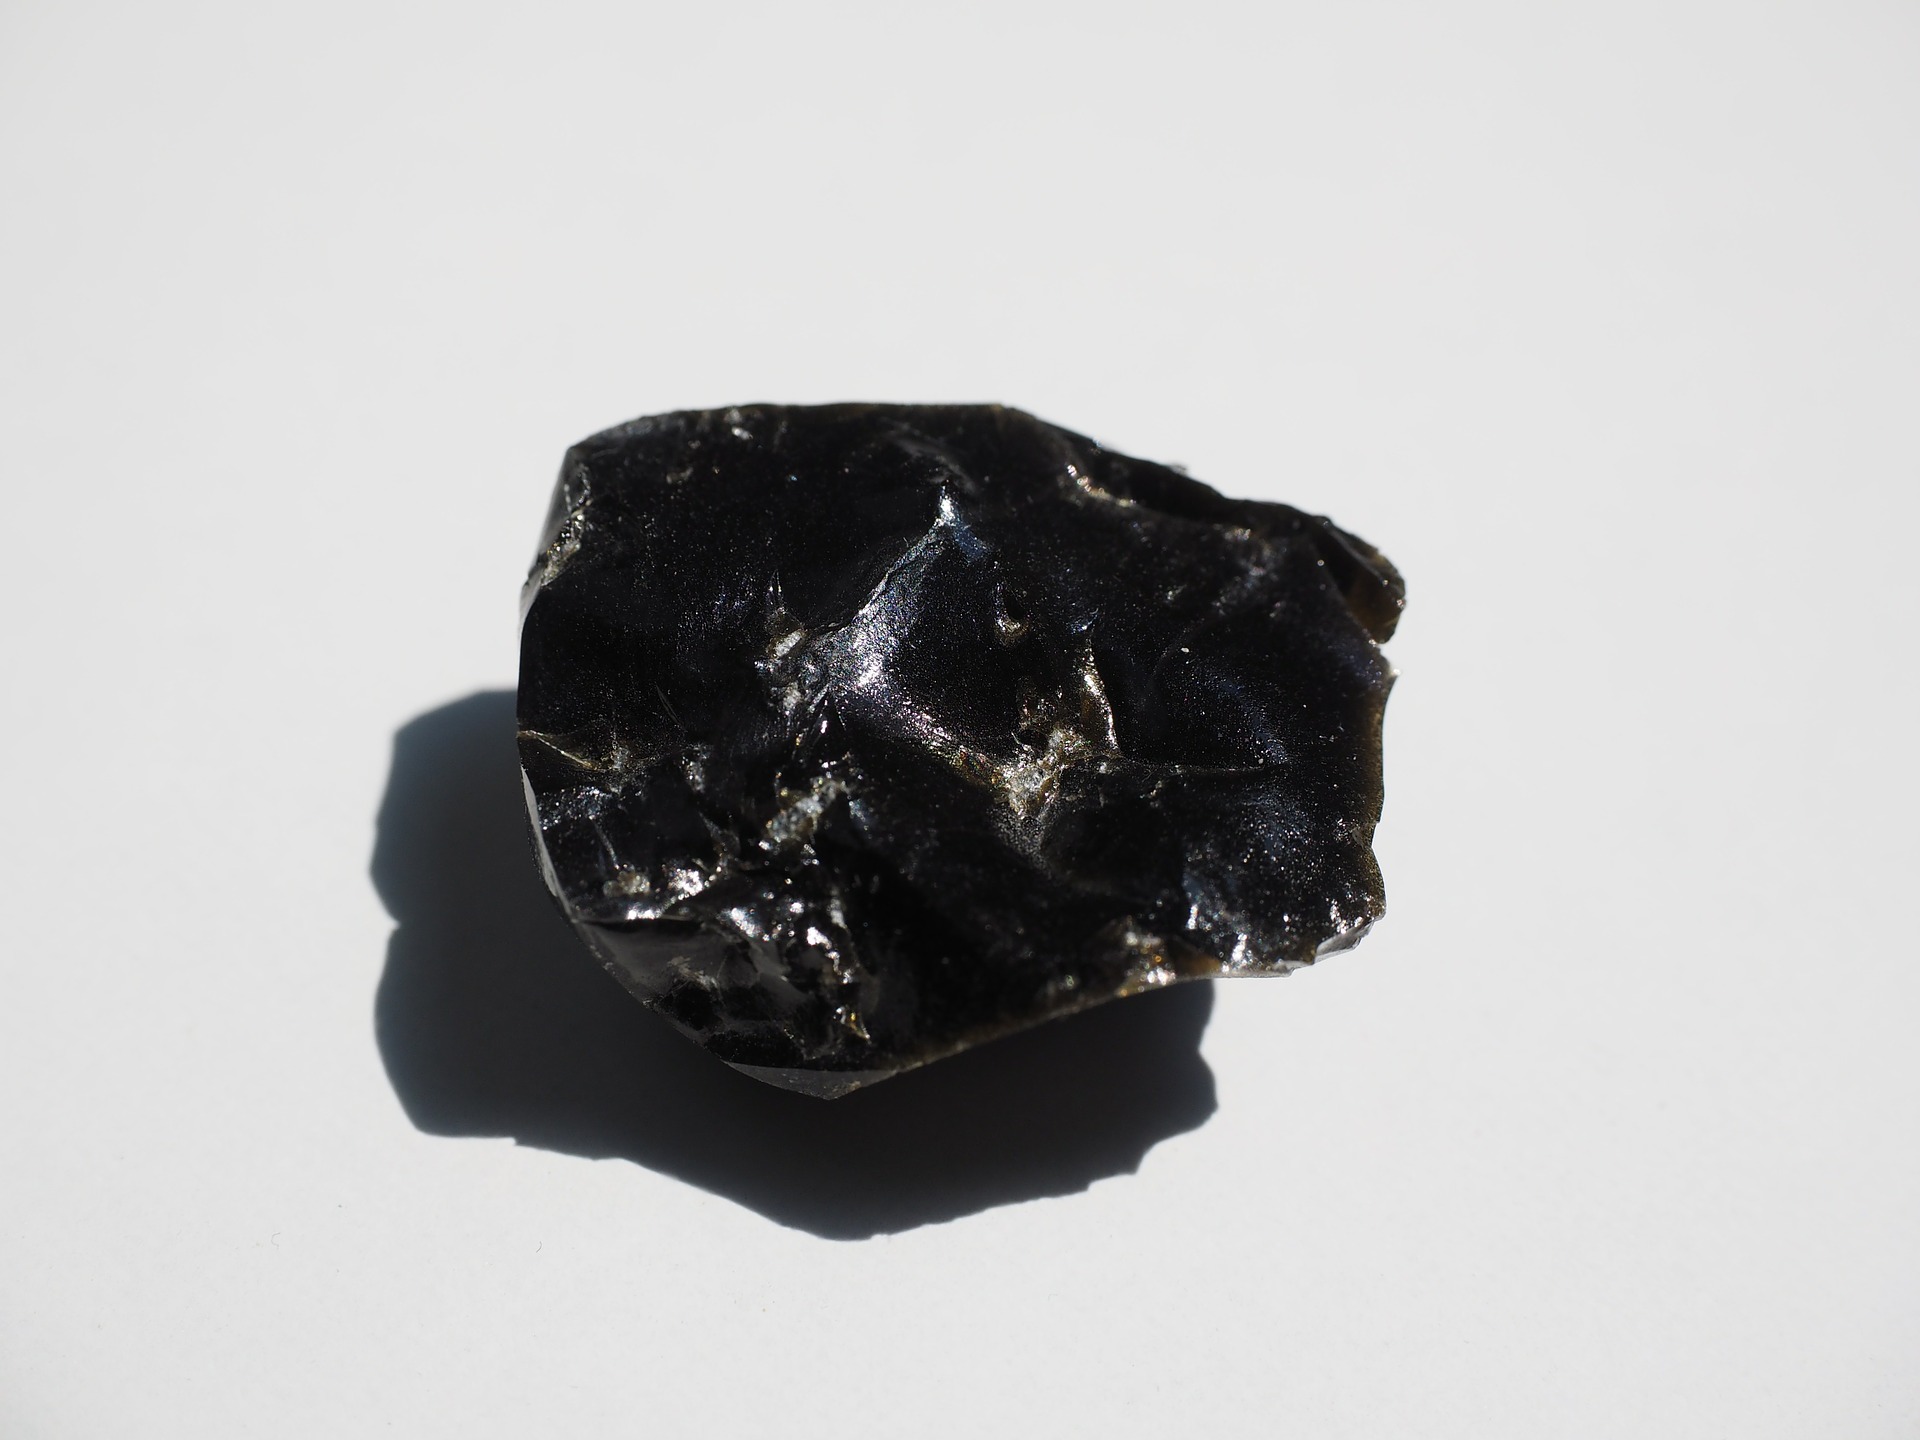 obsidian-505333_1920-jpg.935203